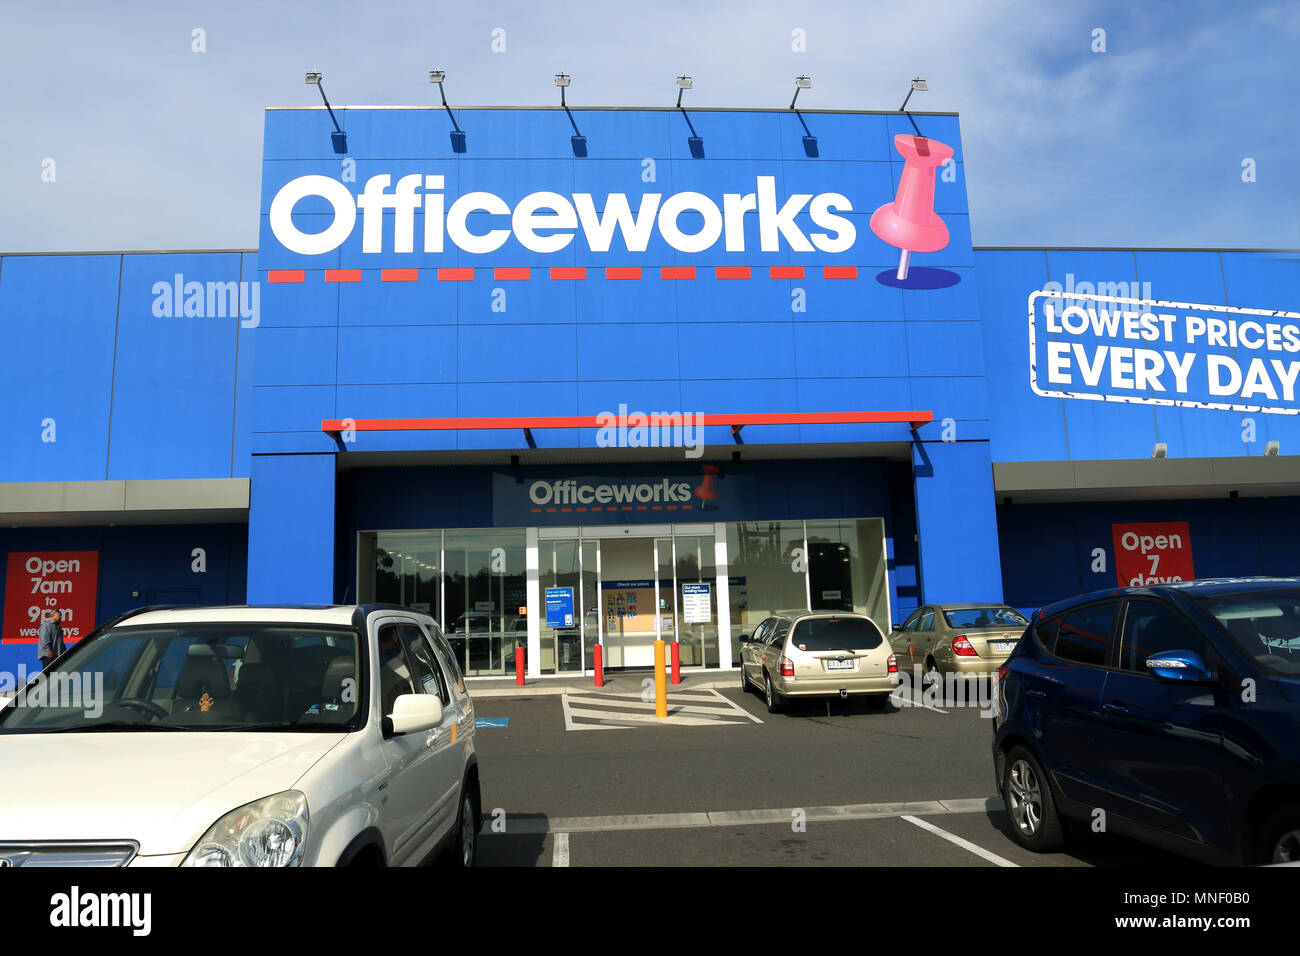 Officeworks - Australian office supplies store Stock Photo